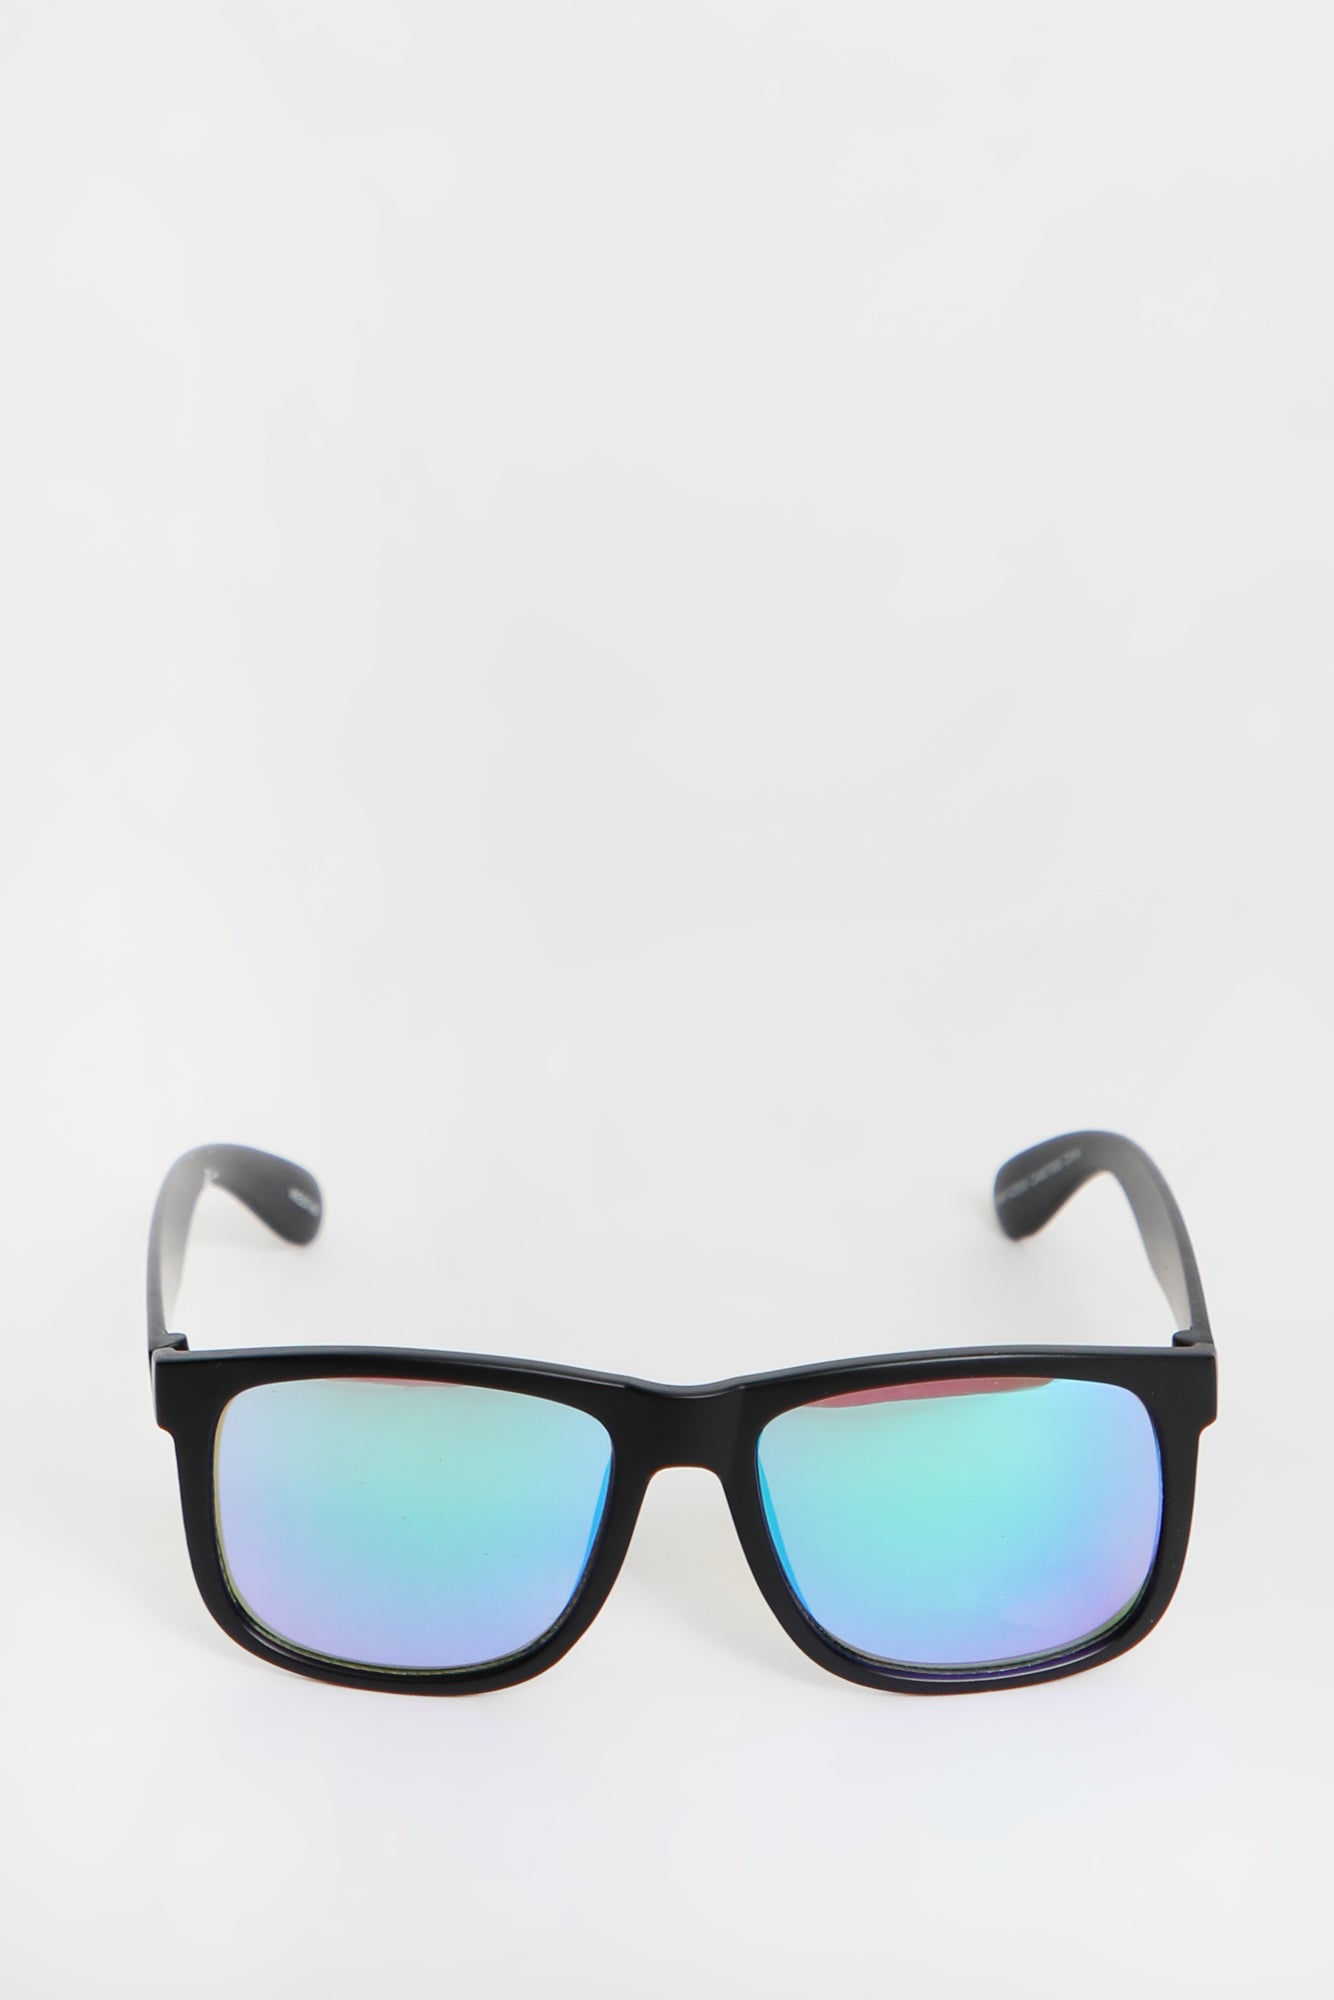 West49 Matte Black Sunglasses - Black / O/S